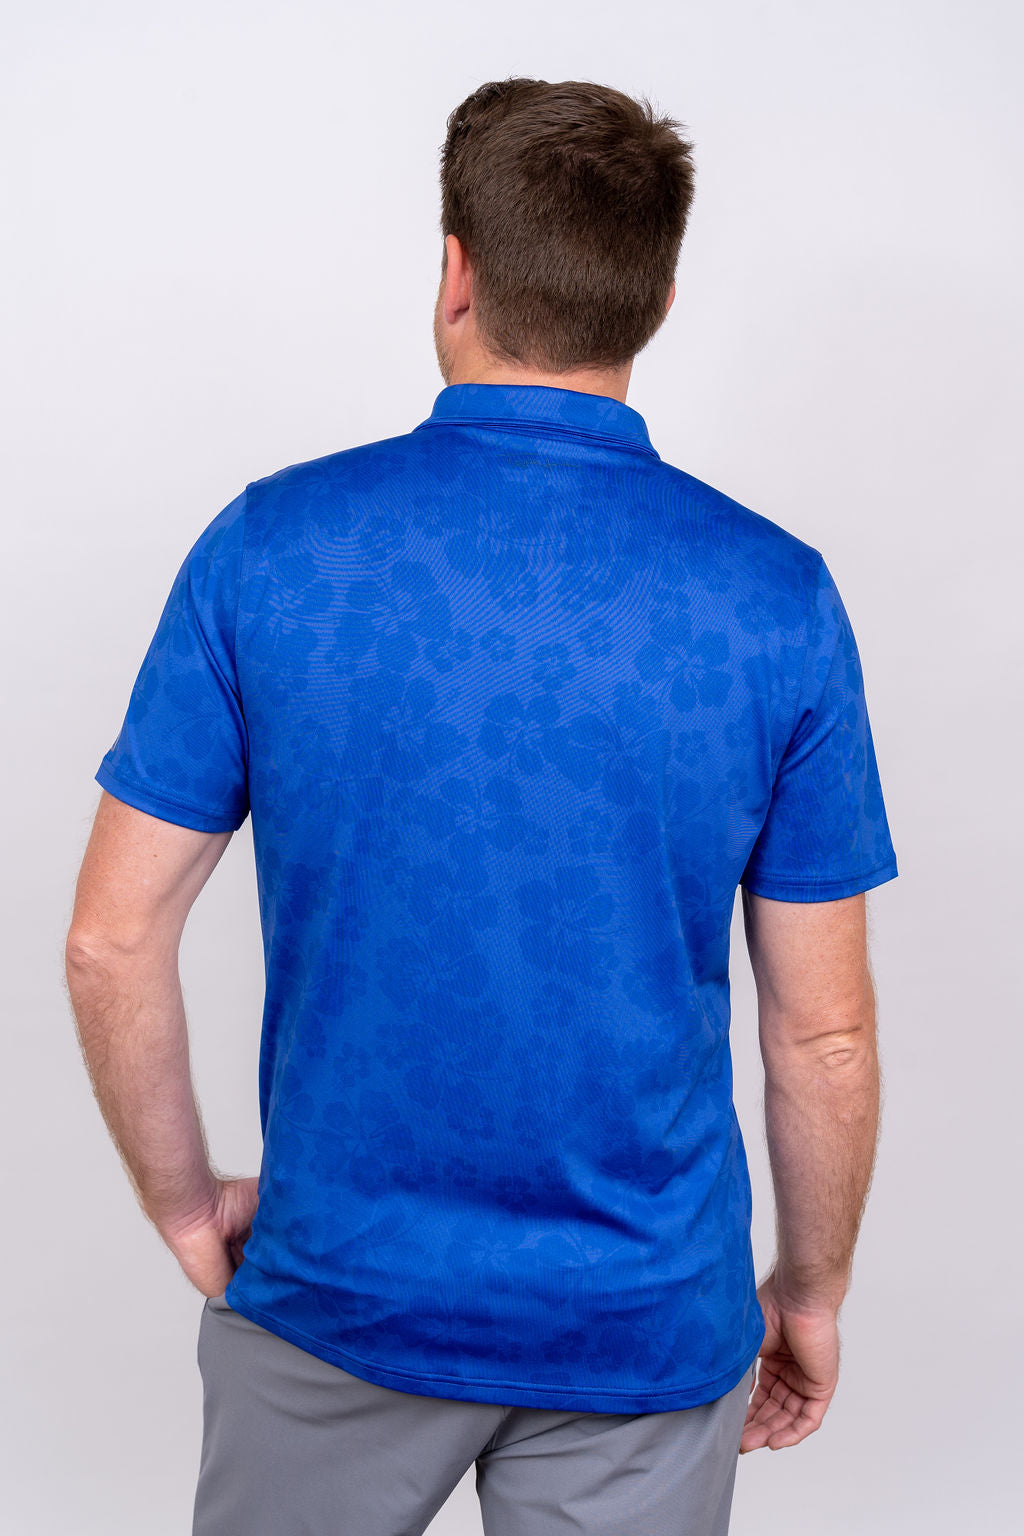 Player's Golf Shirt- Royal Blue Ghost Hibiscus Men's Golf Shirt Taylor Jordan Apparel 